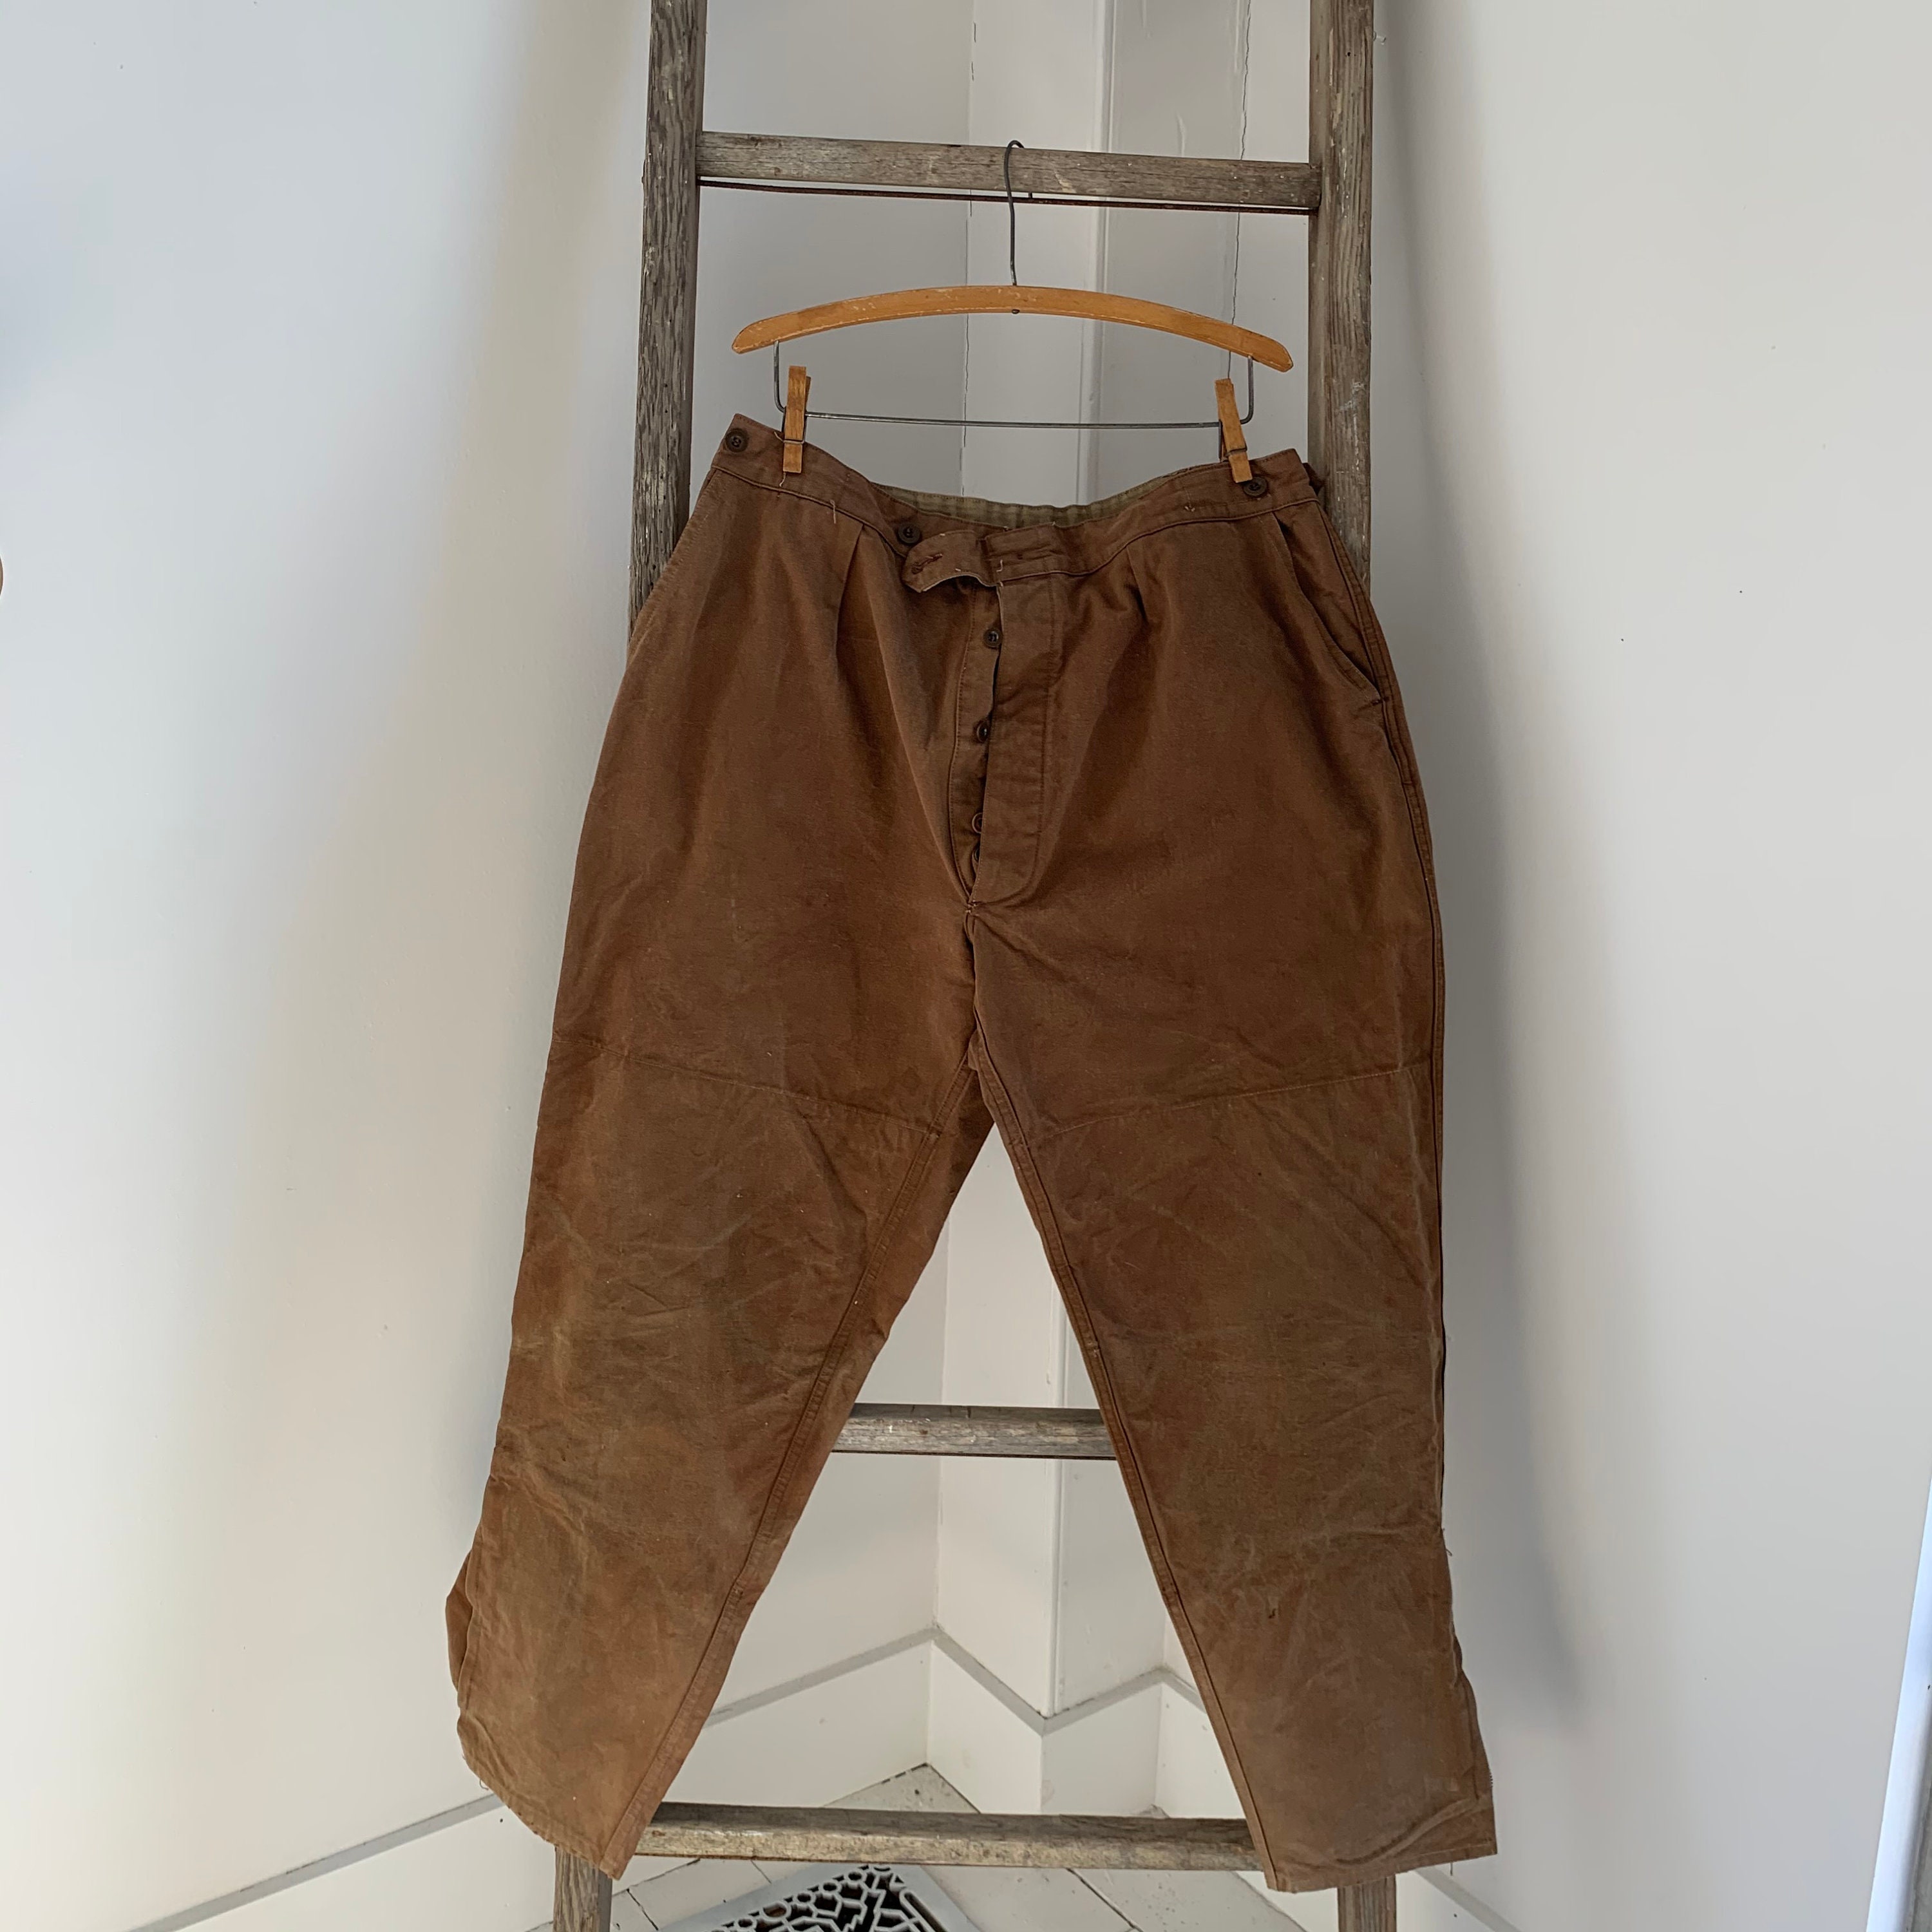 Canvas Workwear Trousers, Vintage Men's Trousers